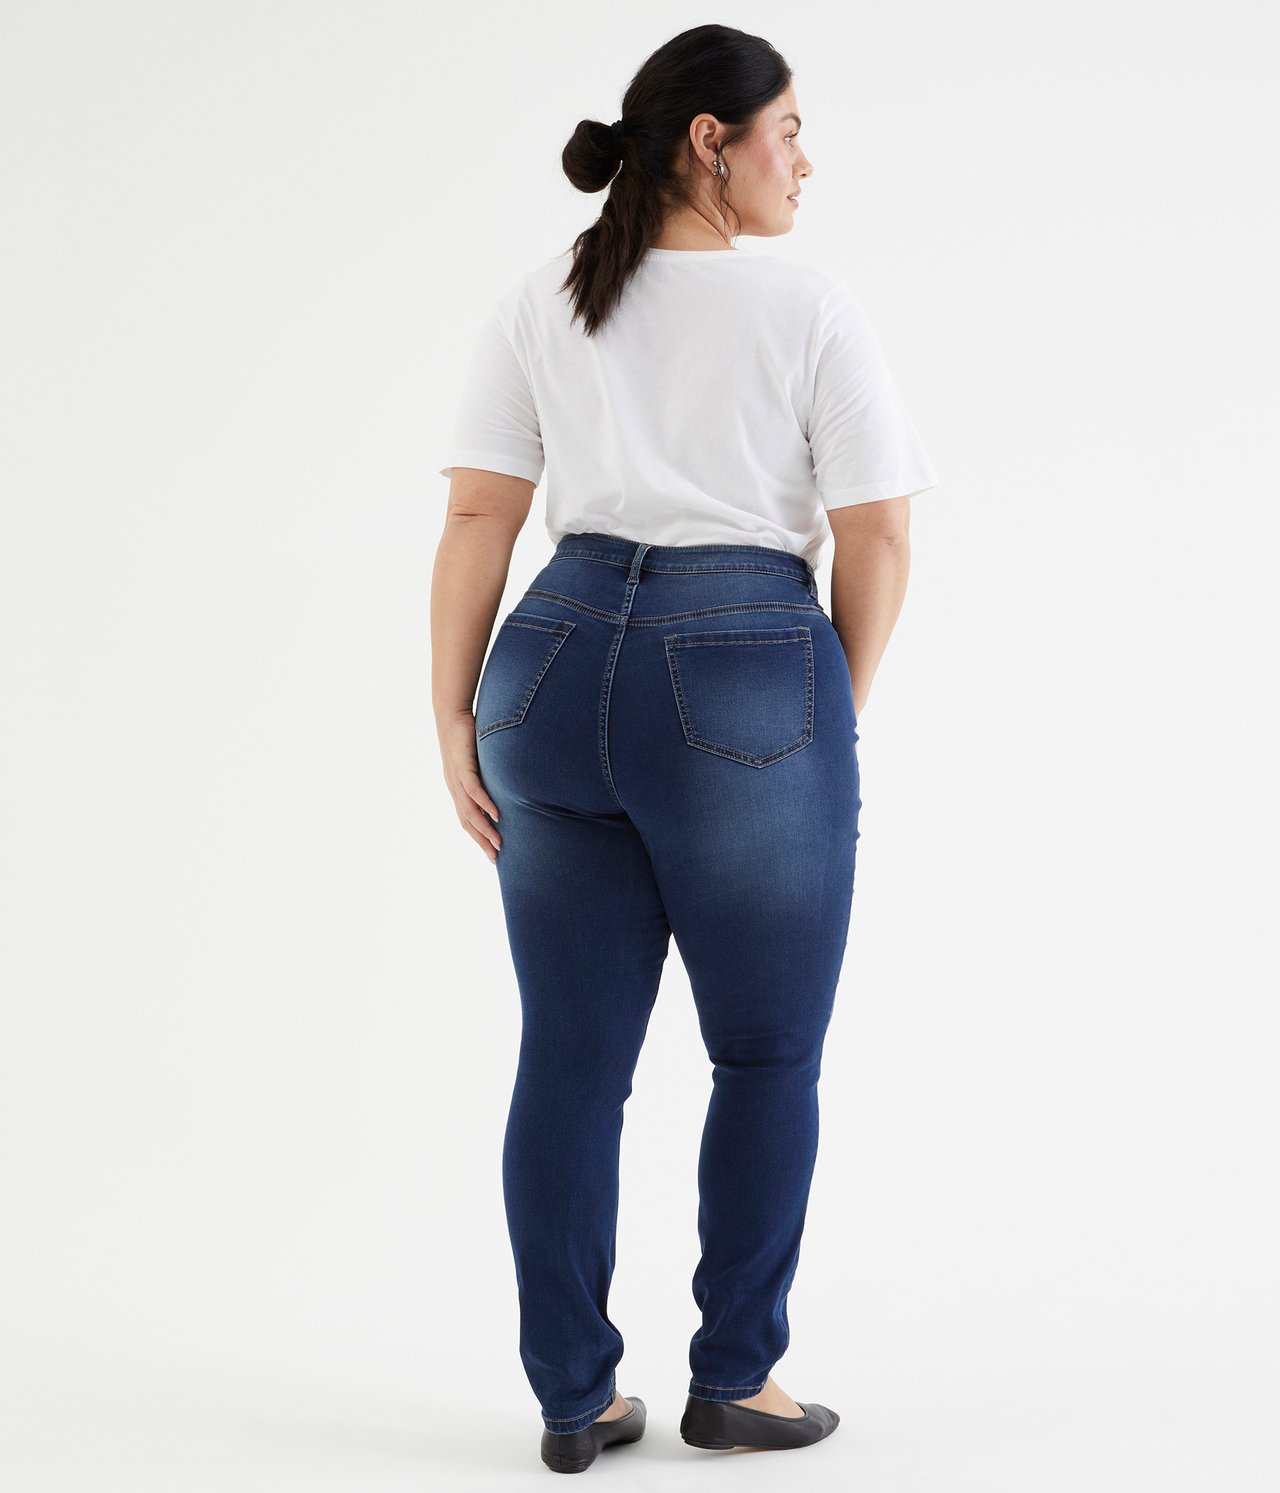 Ebba slim jeans extra long leg - Mörk denim - 177cm / Storlek: 50L - 4